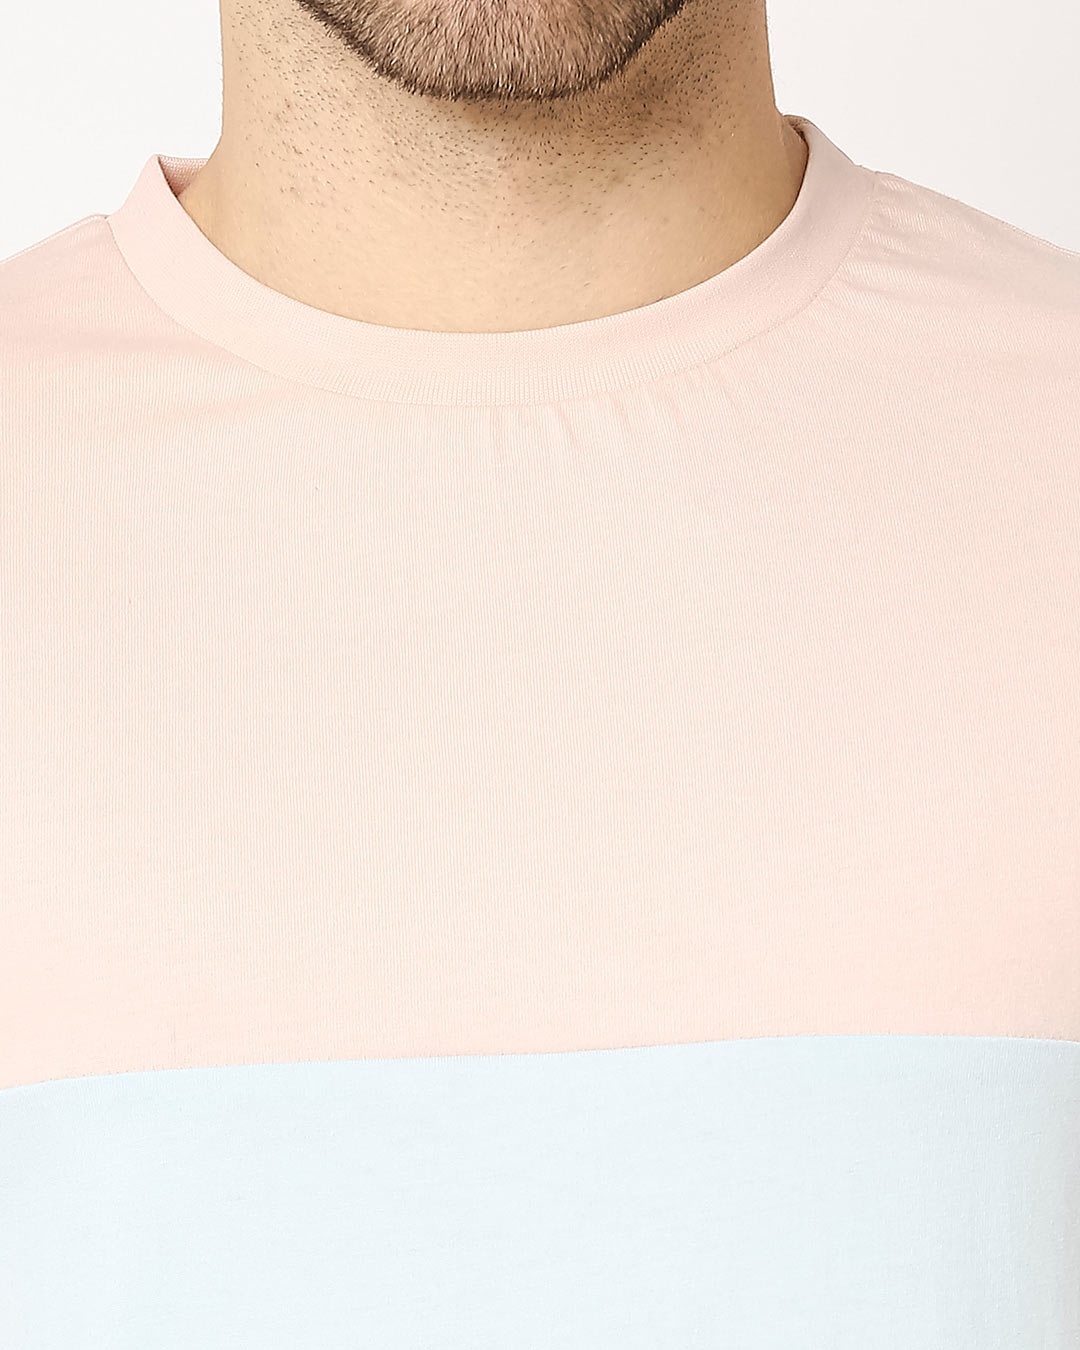 Shop Seashell Pink Candy Color Block T-Shirt